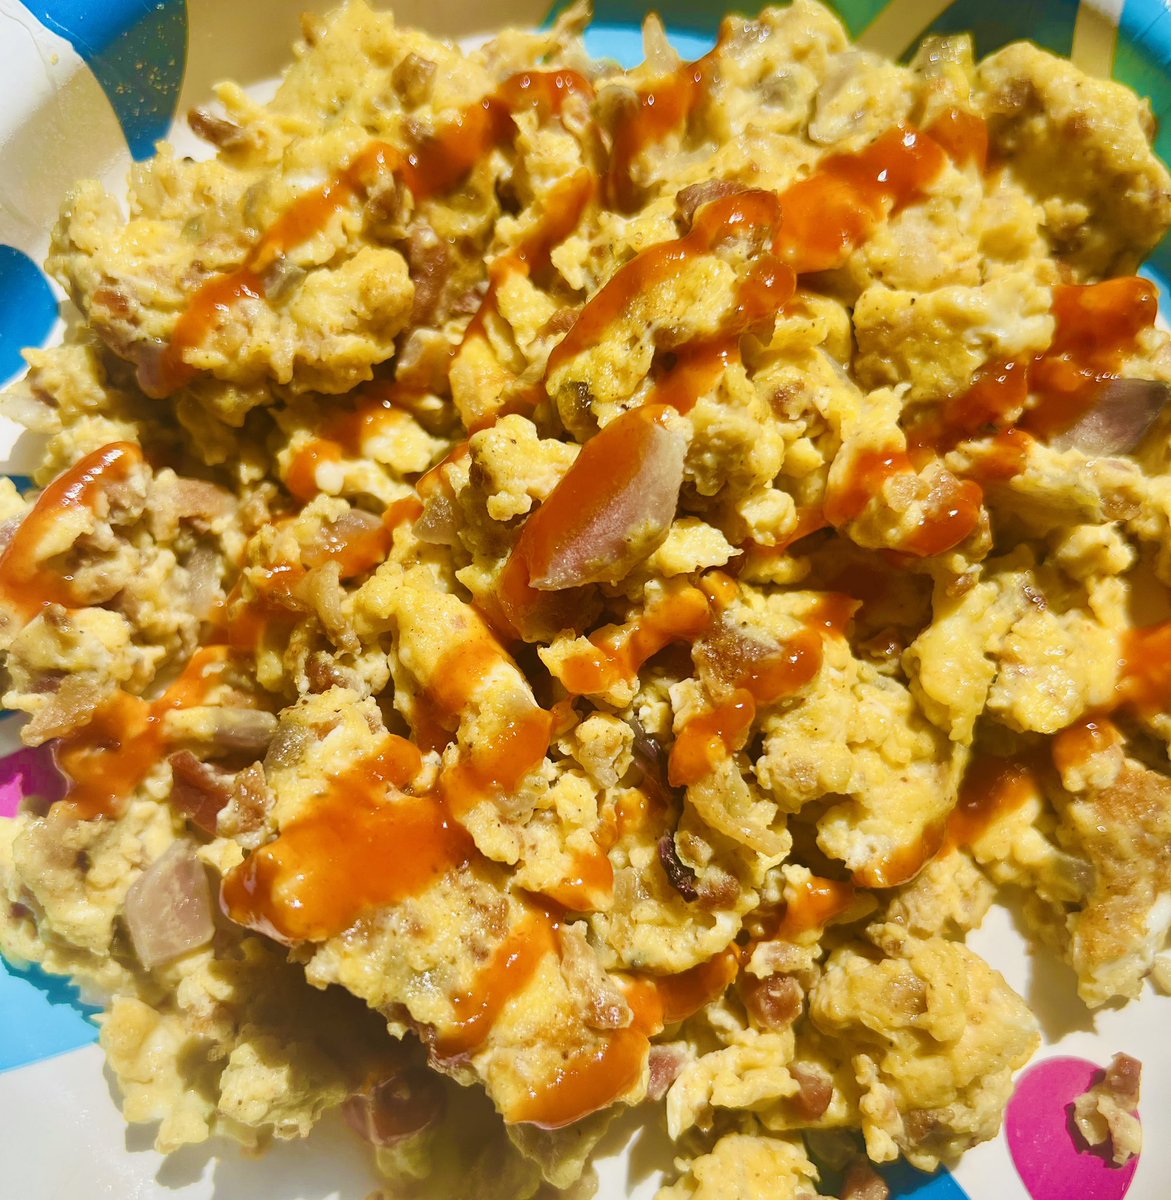 Simple scrambled eggs and #sriracha for breakfast today 

#ketorecipe #ketolove #ketolunch #ketomeal #ketomealprep #ketofamily #ketoeats #ketogeniclife #ketodess #ketoadapted #ketoforbeginners #lowcarbrecipes #lowcarbfood #lowcarbliving